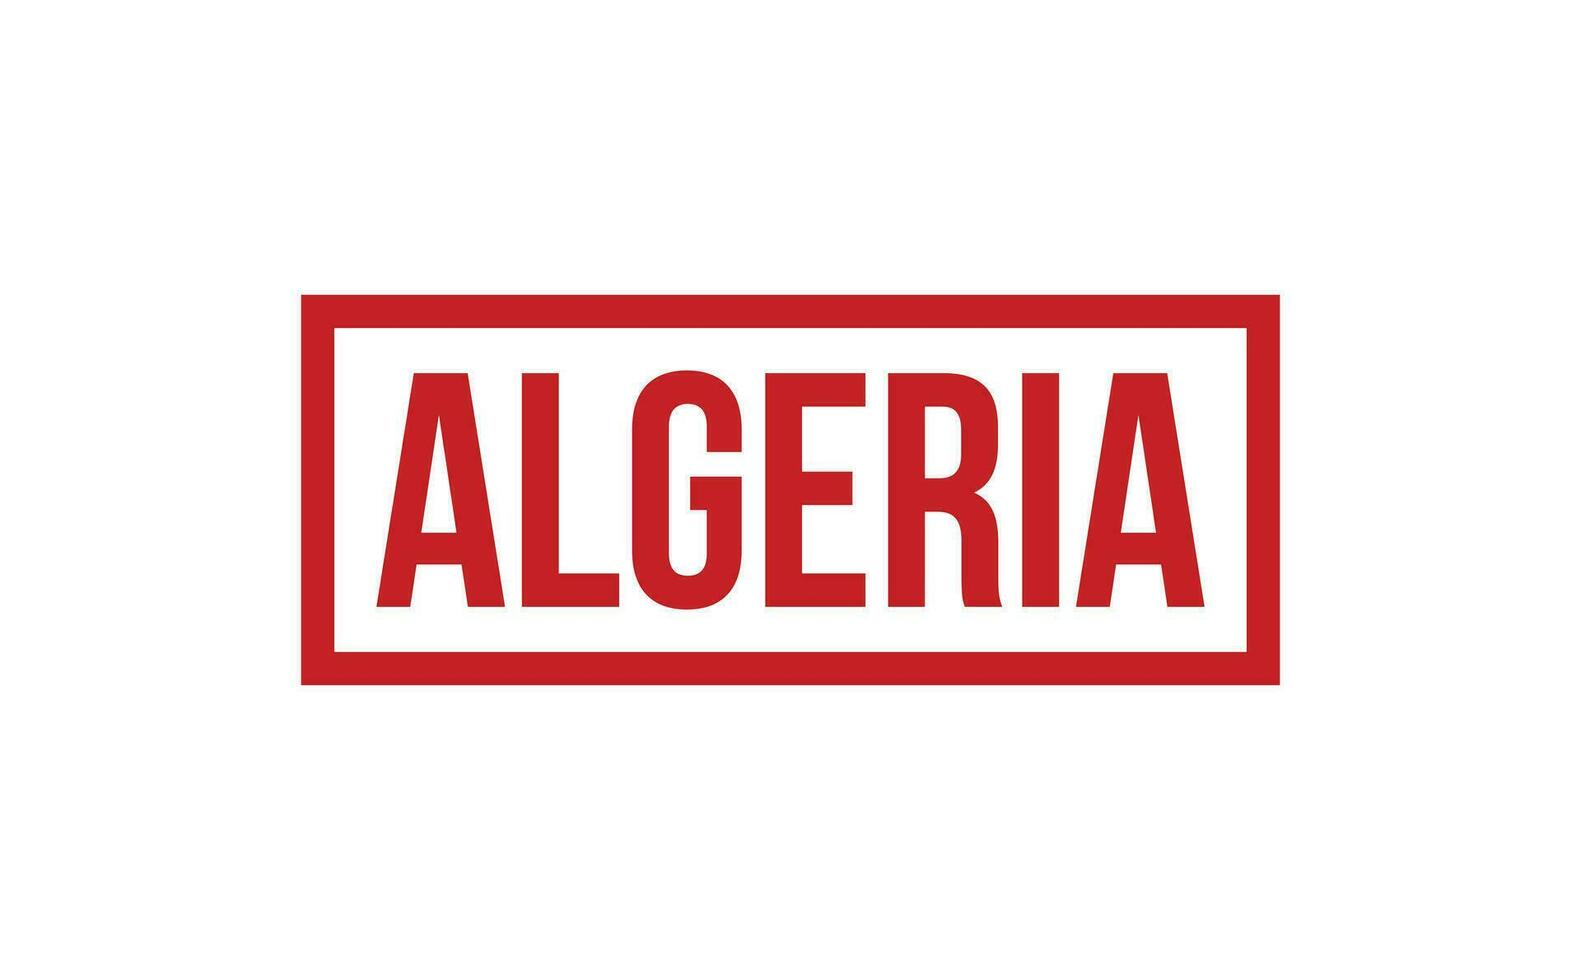 Algeria Rubber Stamp Seal Vector